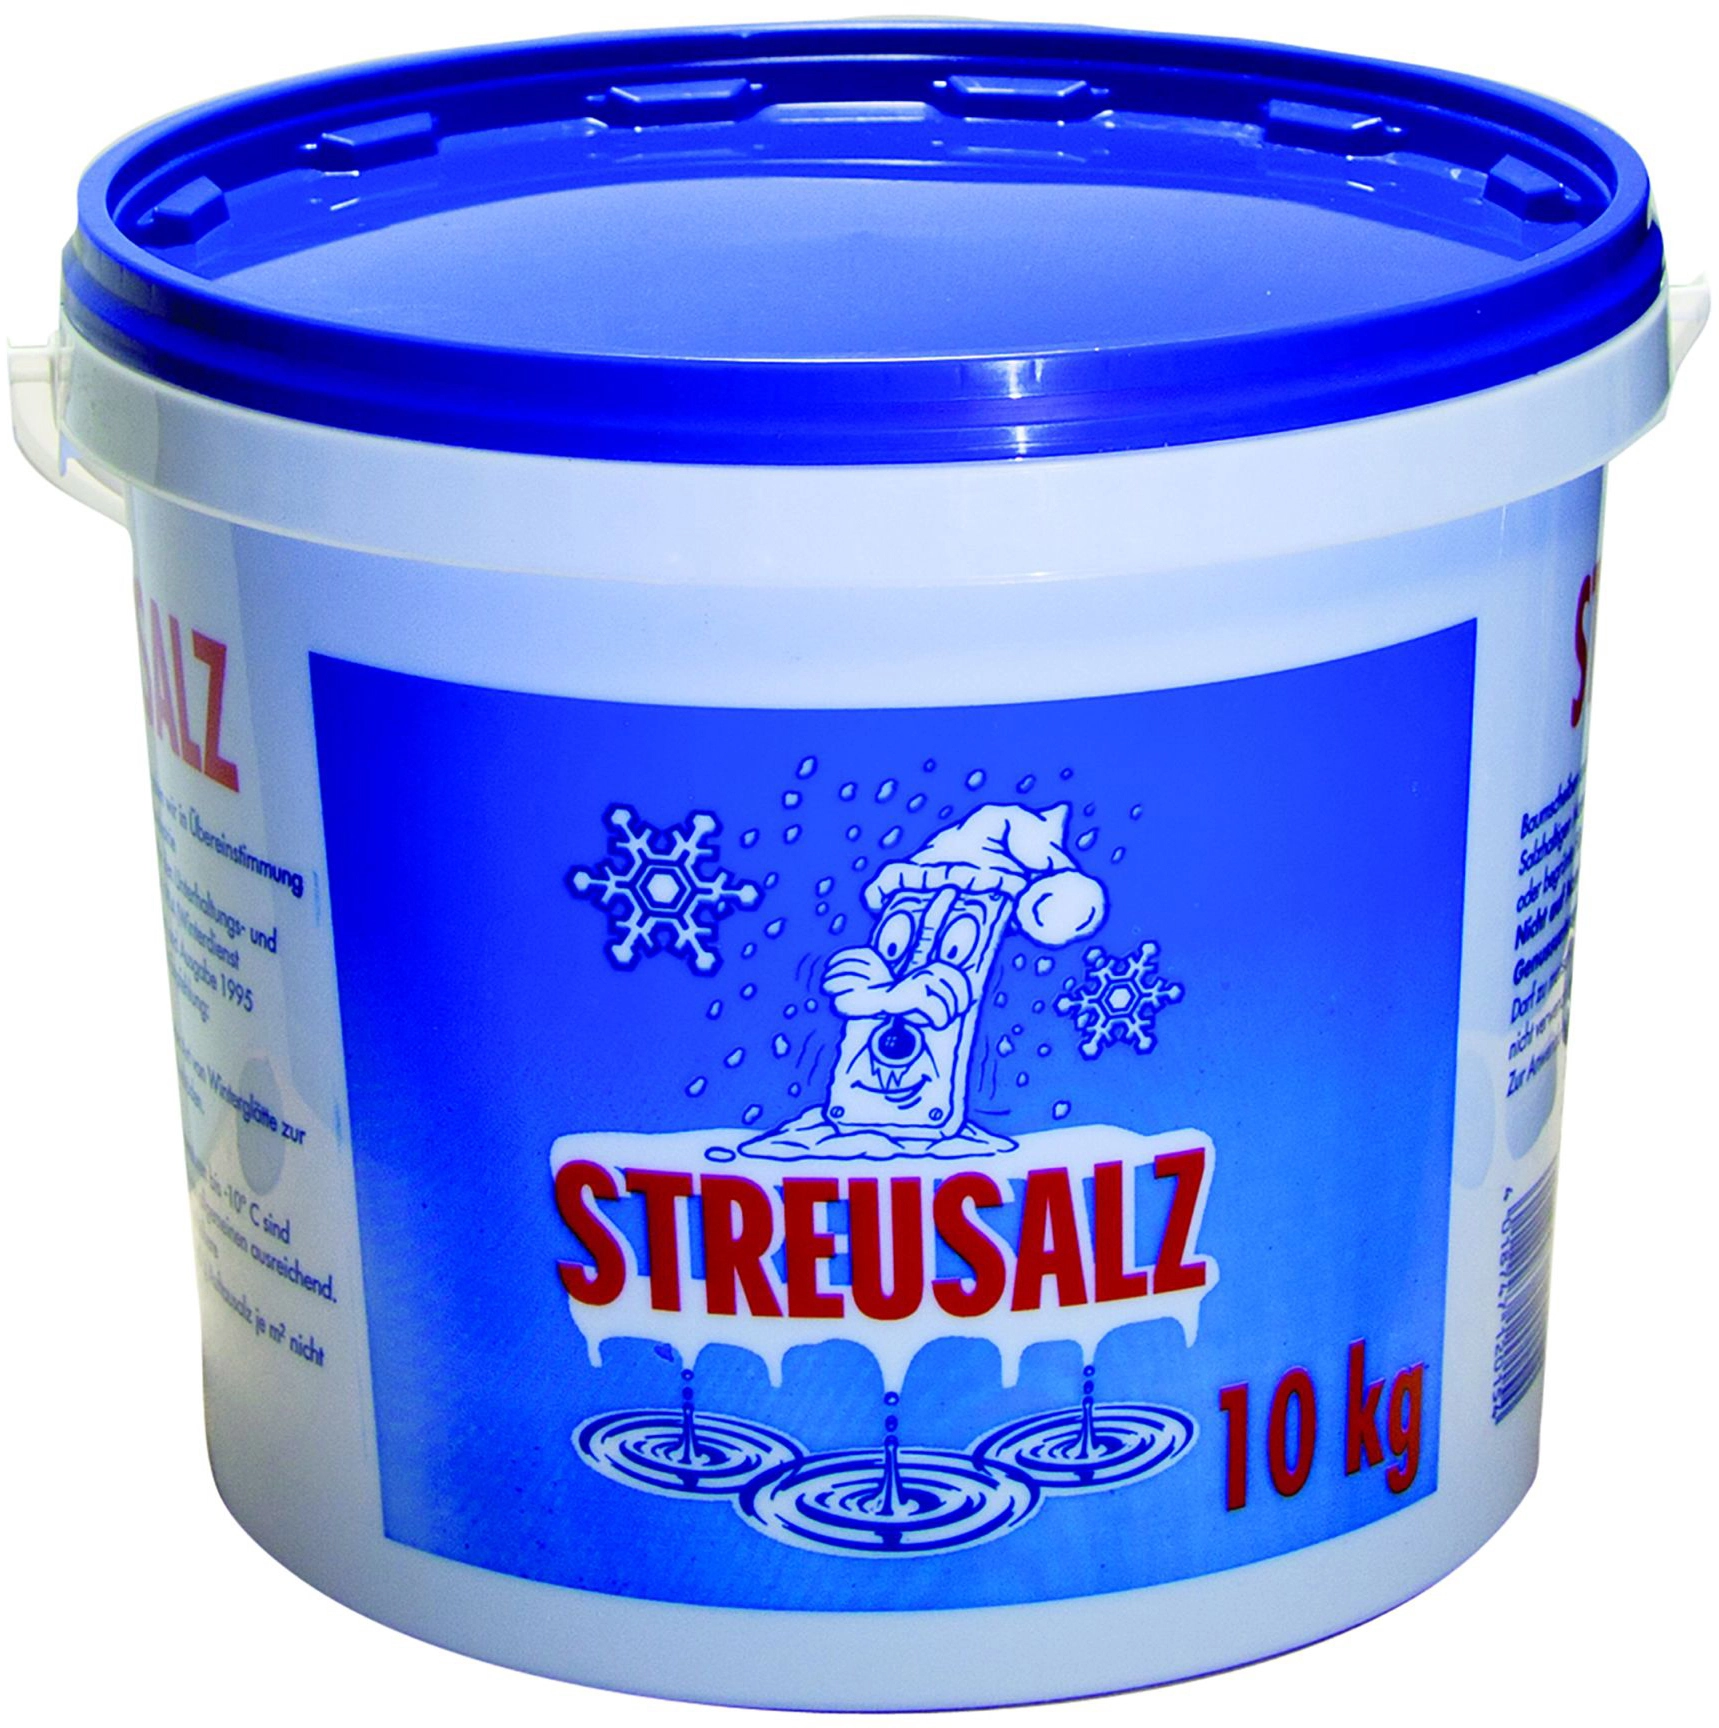 Streusalz 2 x 10 kg bucket with shovel, German salts, quality defrosting  salt, top quality, winter salt